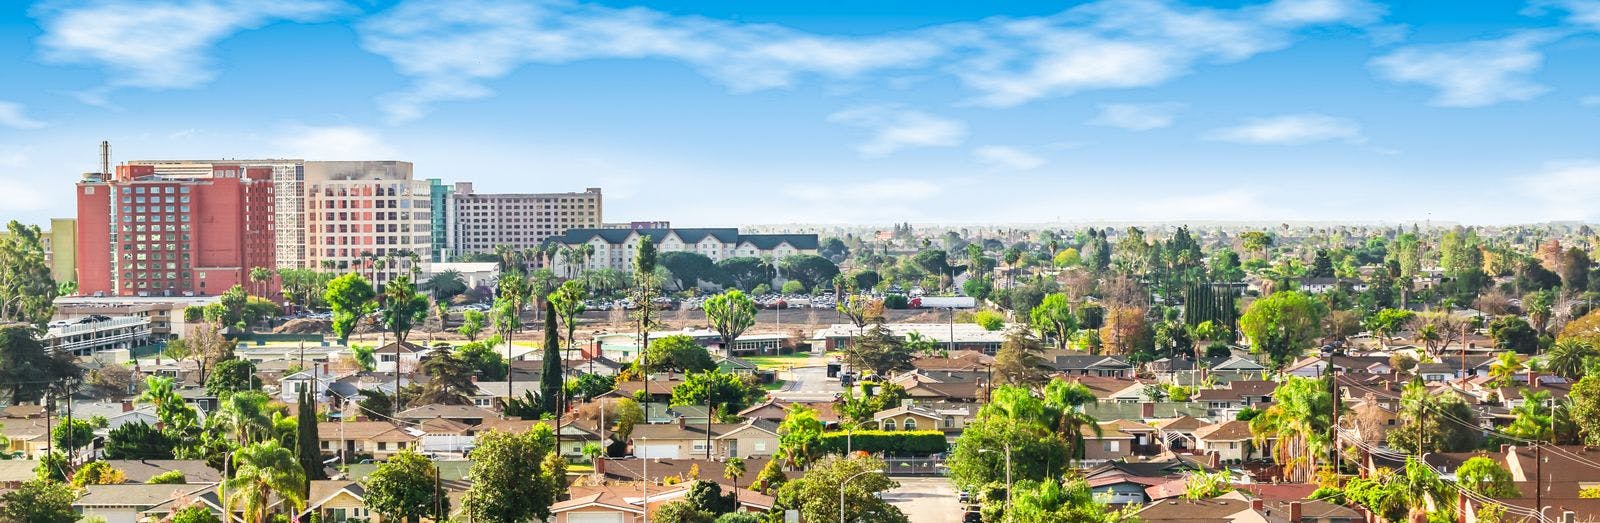 Anaheim neighborhood panoramic shot of houses and hotels